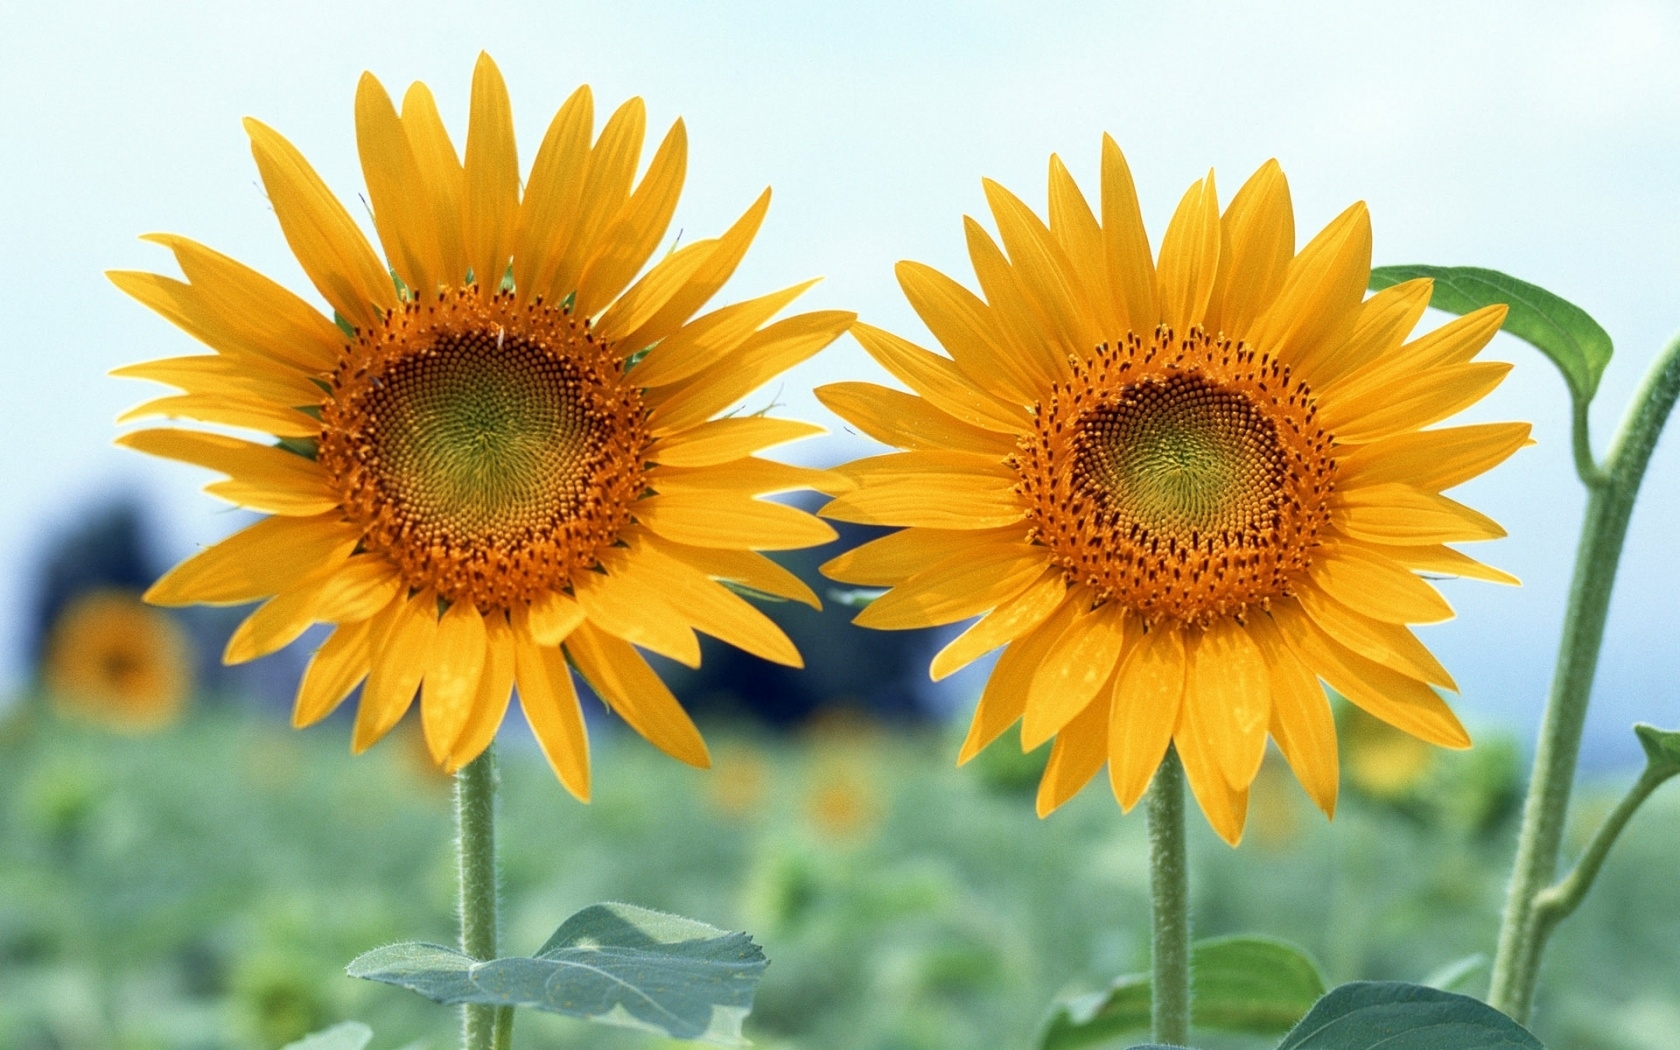 plants, sunflowers Image for desktop